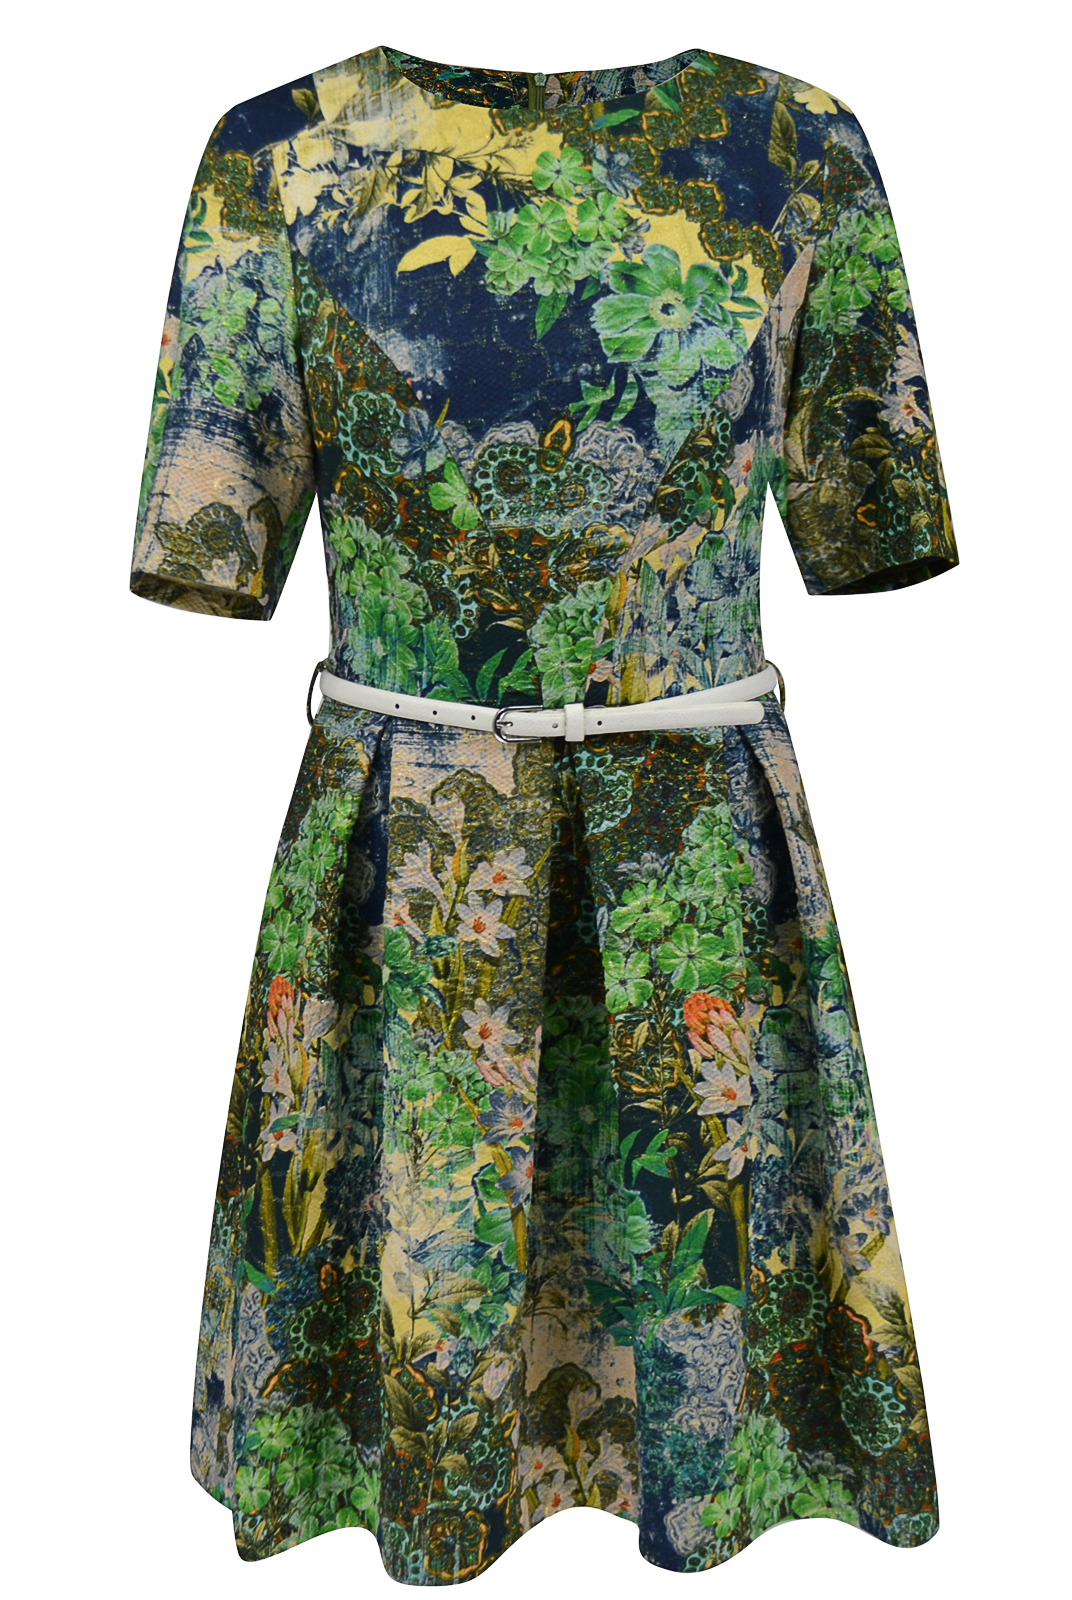 Платье женское Mila Bezgerts 1185АН зеленое 40 RU